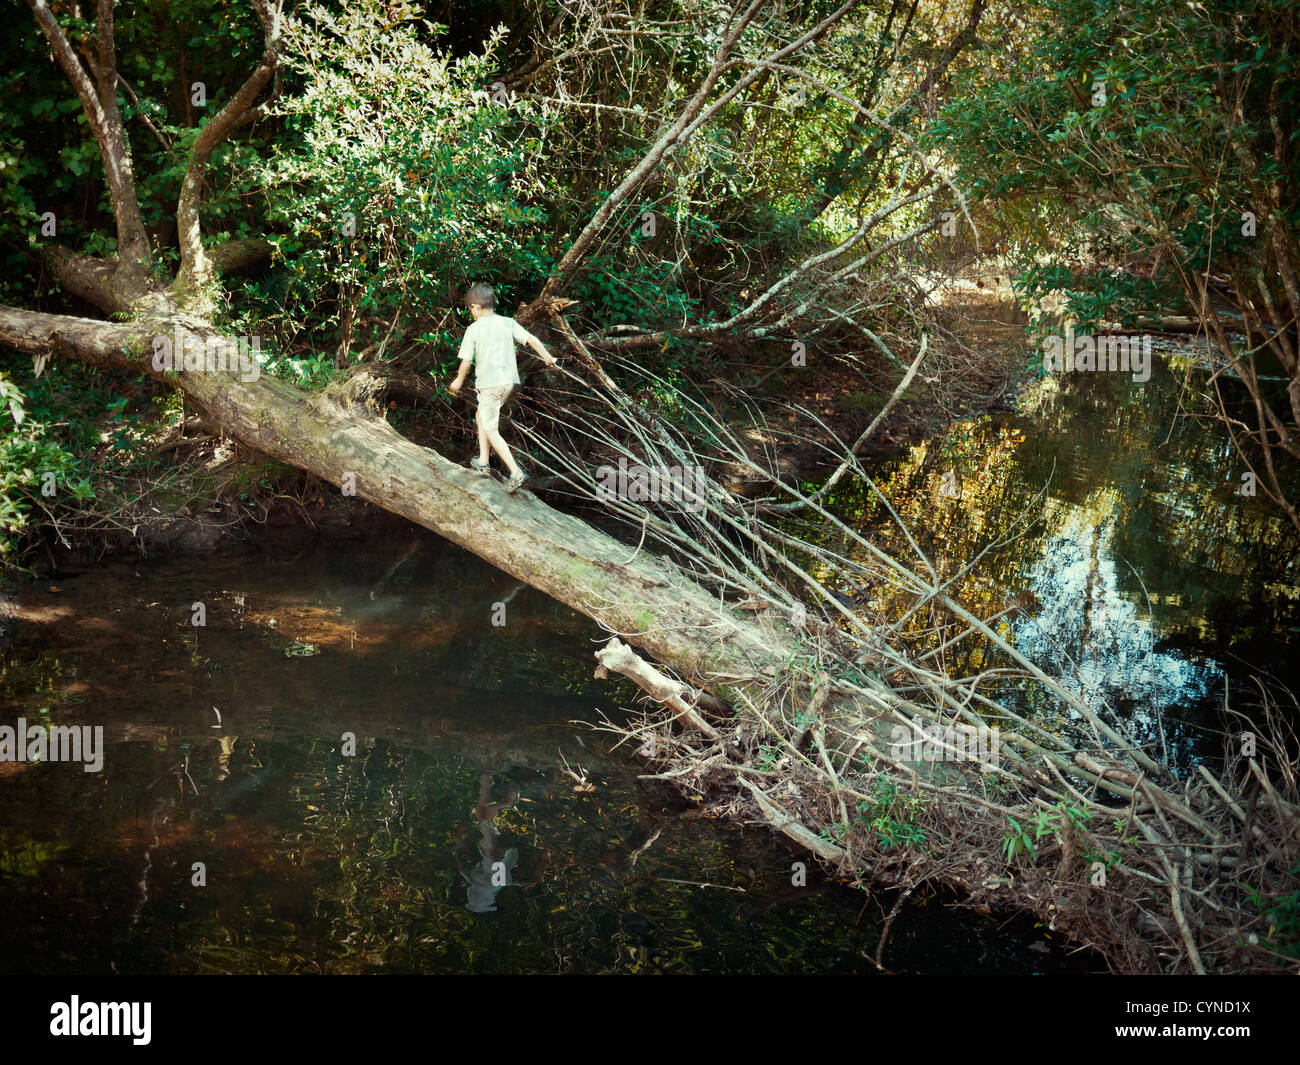 Junge überquert den Fluss auf umgestürzten Baum Brücke. Stockfoto